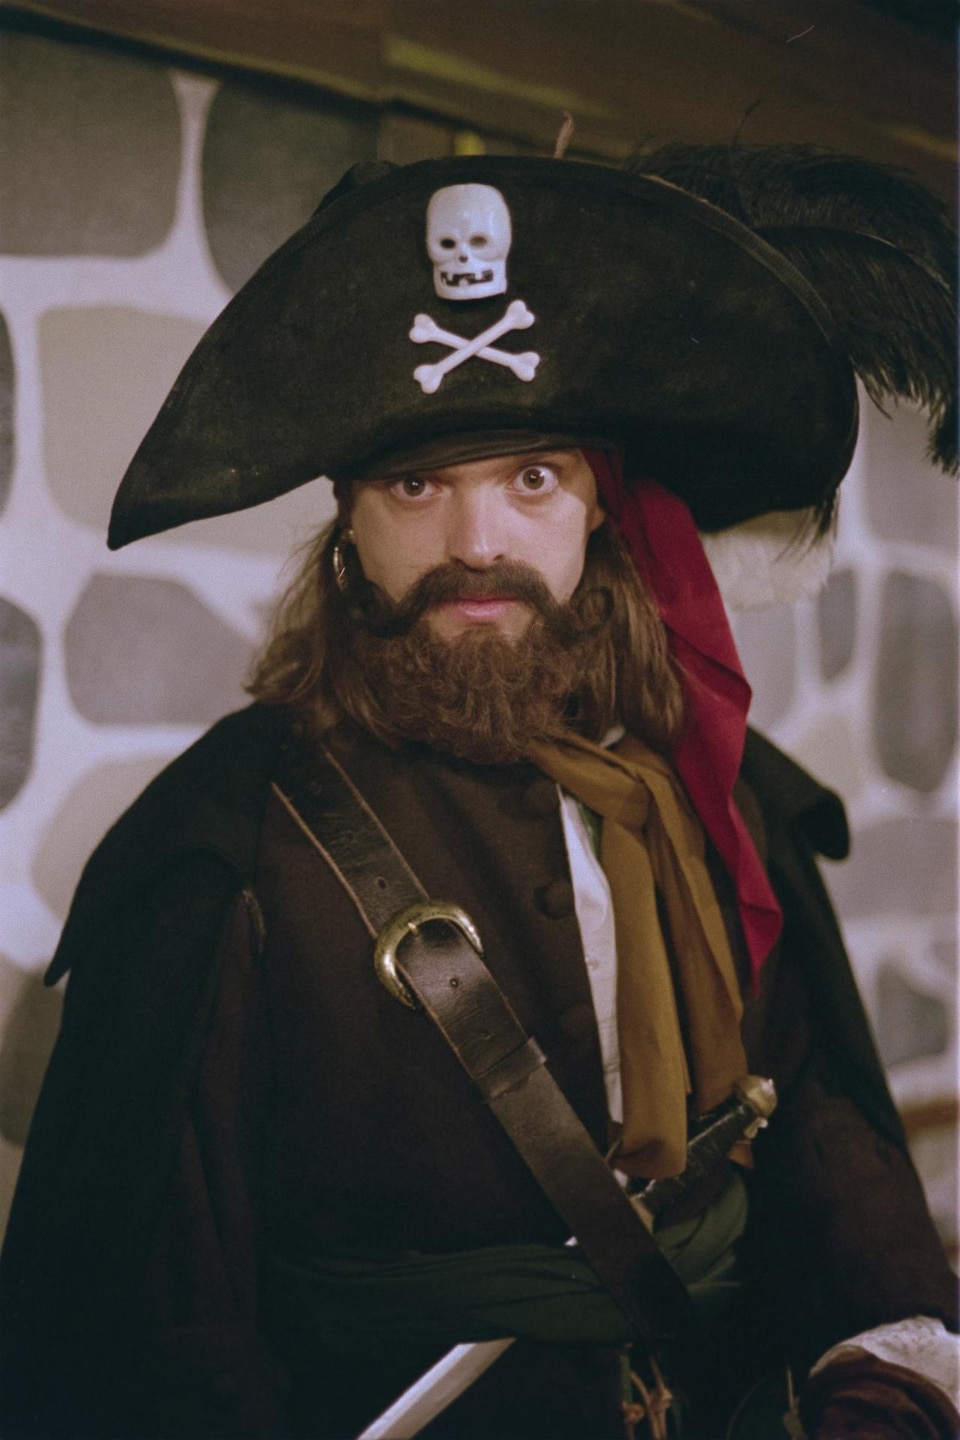 Serge Postigo déguisé en pirate pour un sketch.